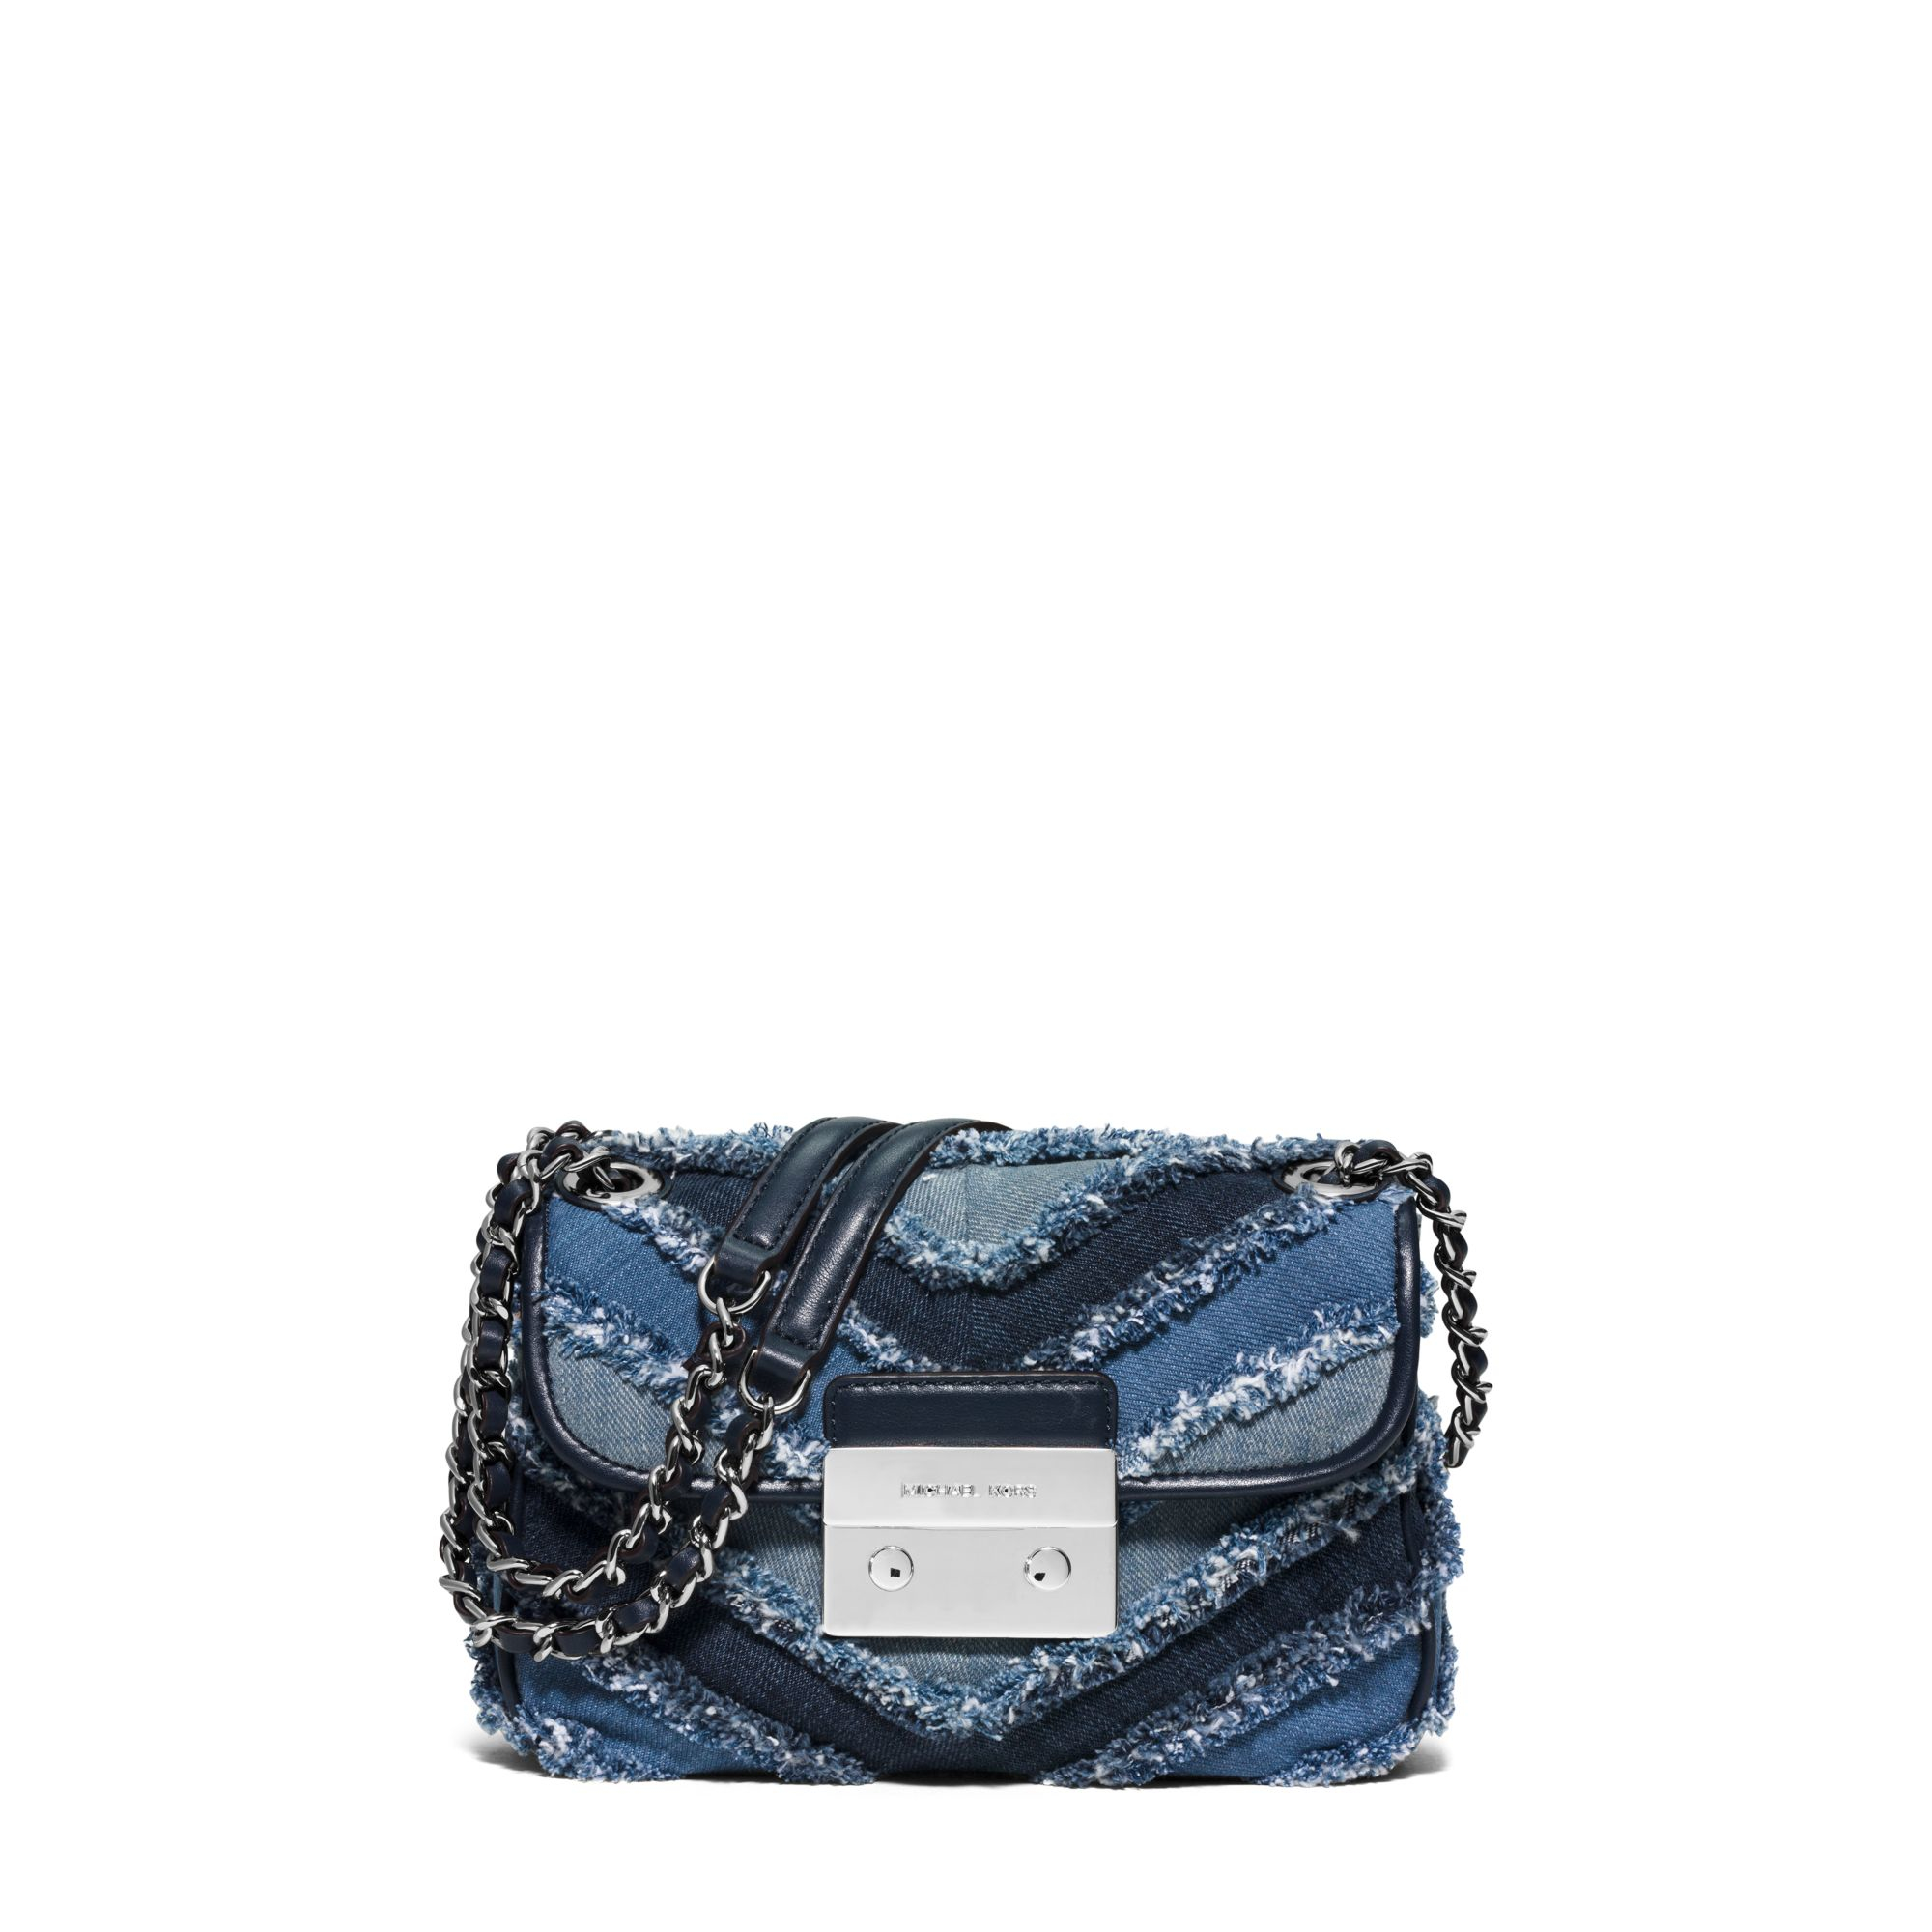 Sold at Auction: Michael Kors Denim Designer Handbag Purse